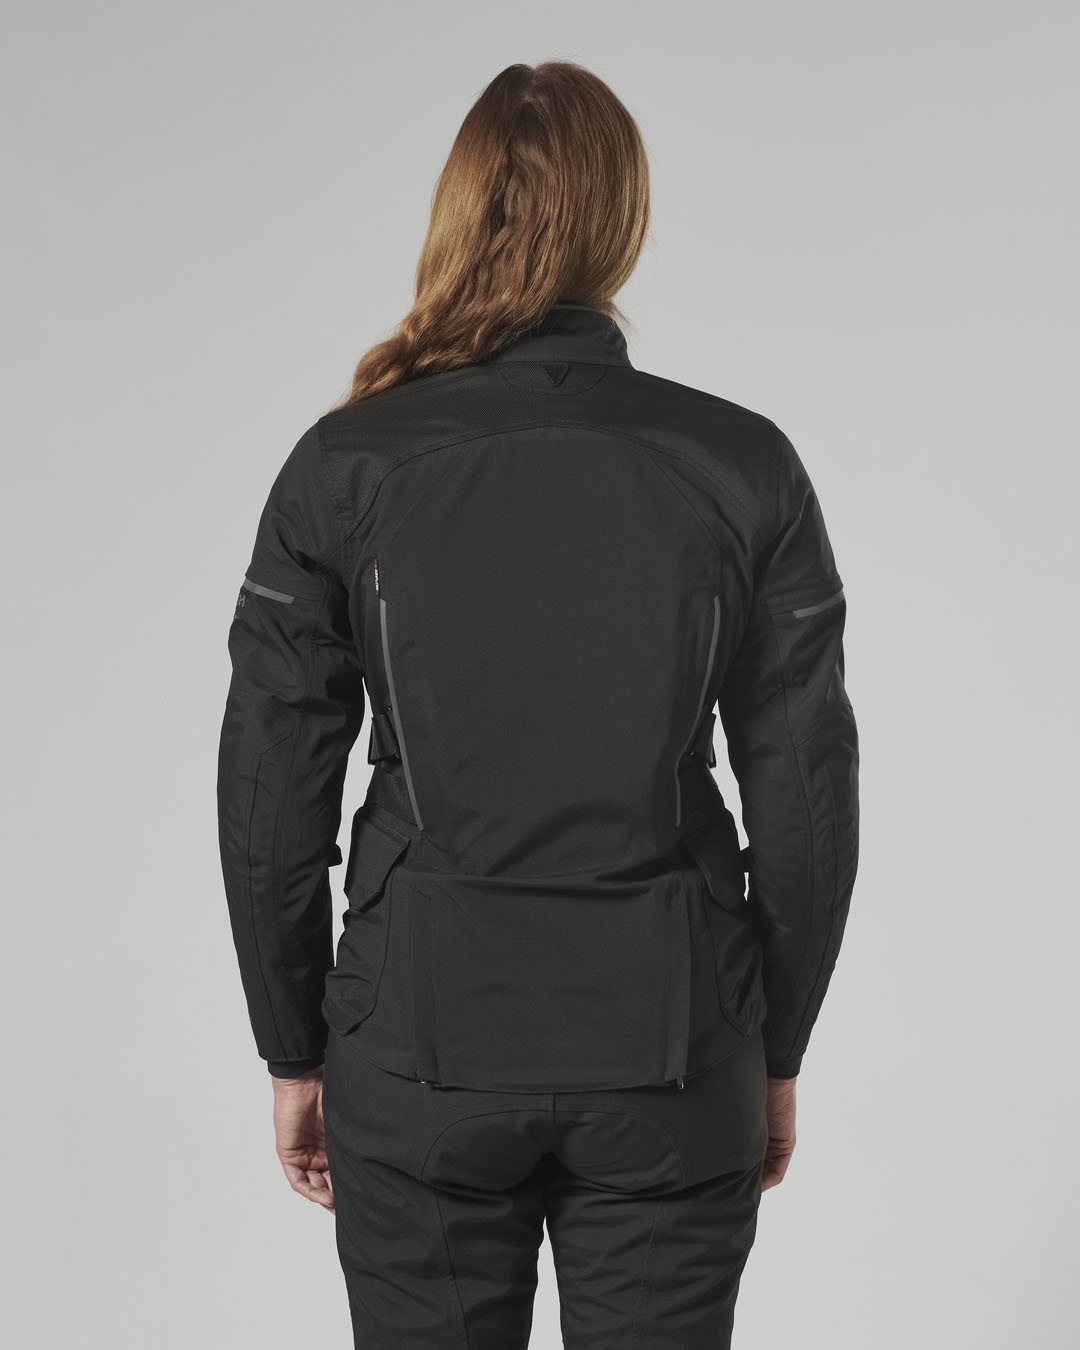 Lynwood Womens GORE-TEX® Black Jacket | Motorcycle Clothing